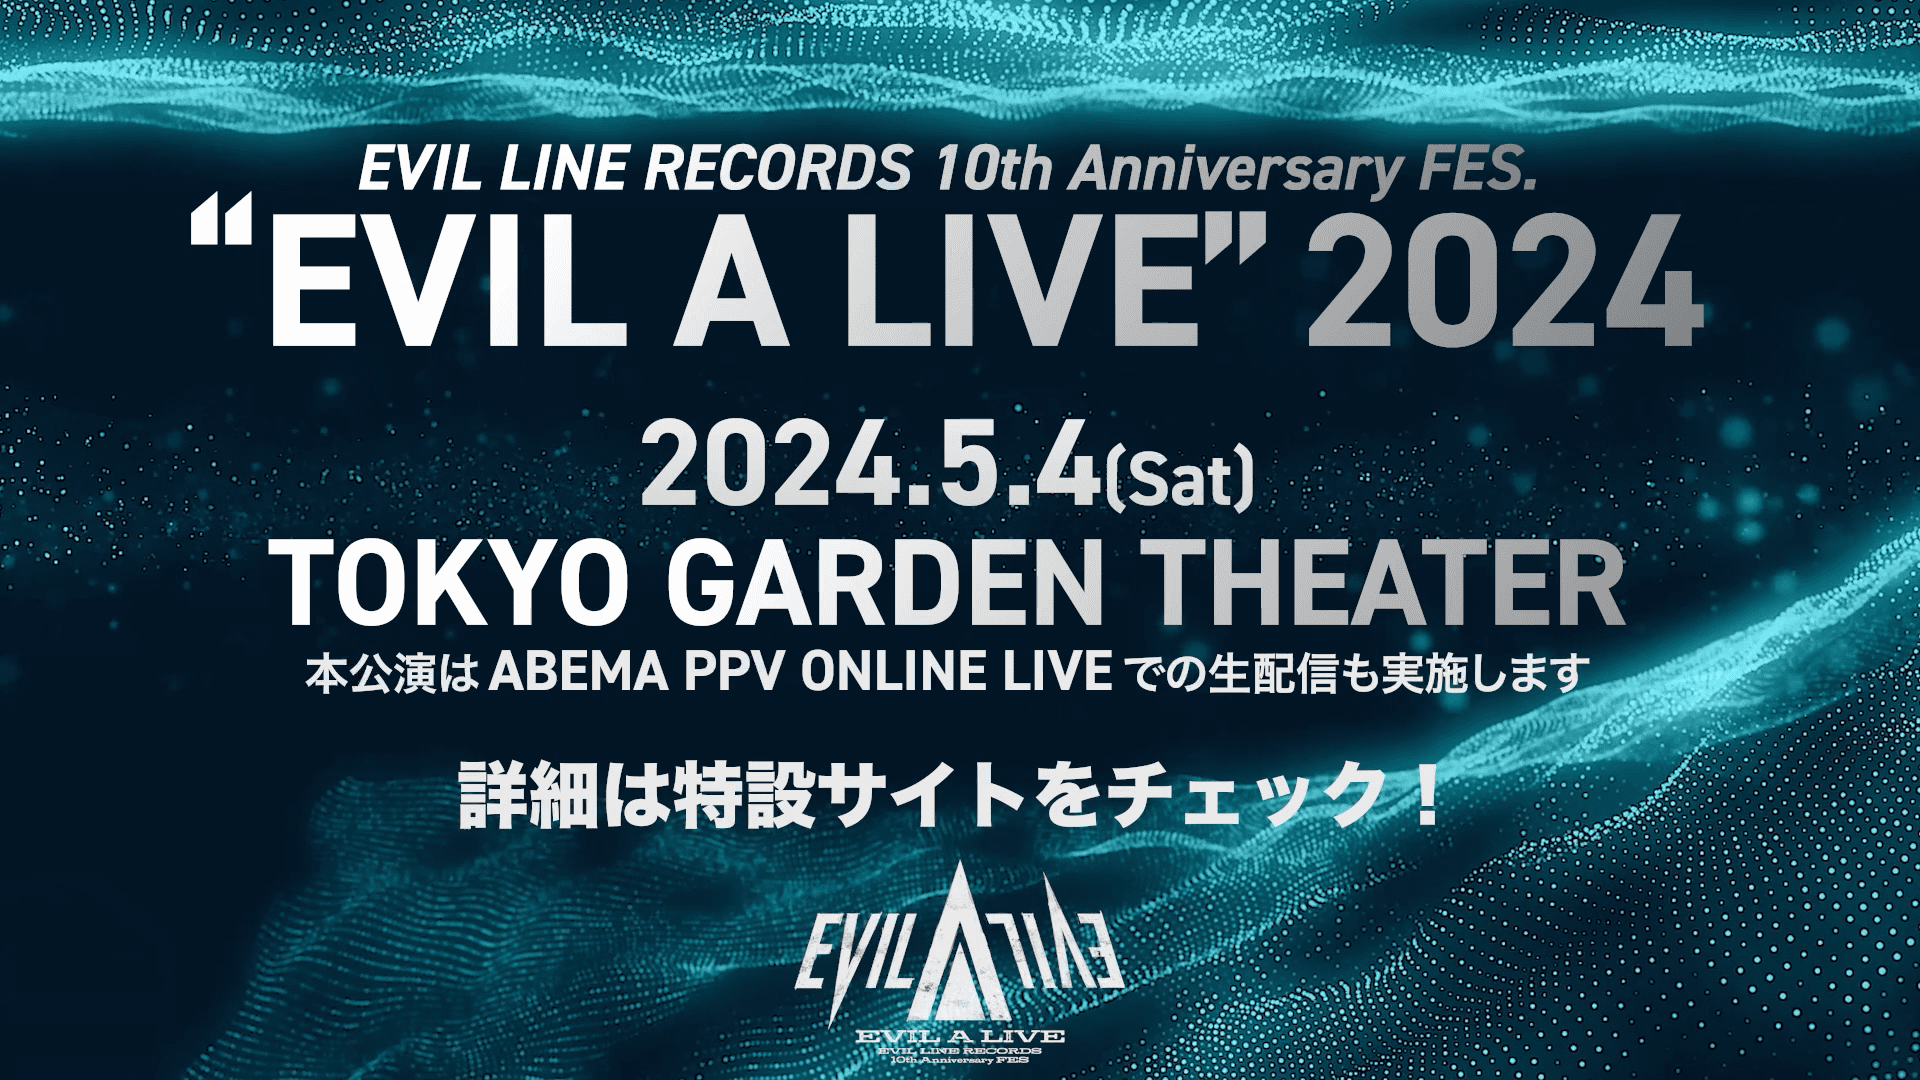 EVIL LINE RECORDS 10th Anniversary FES.
EVIL A LIVE 2024